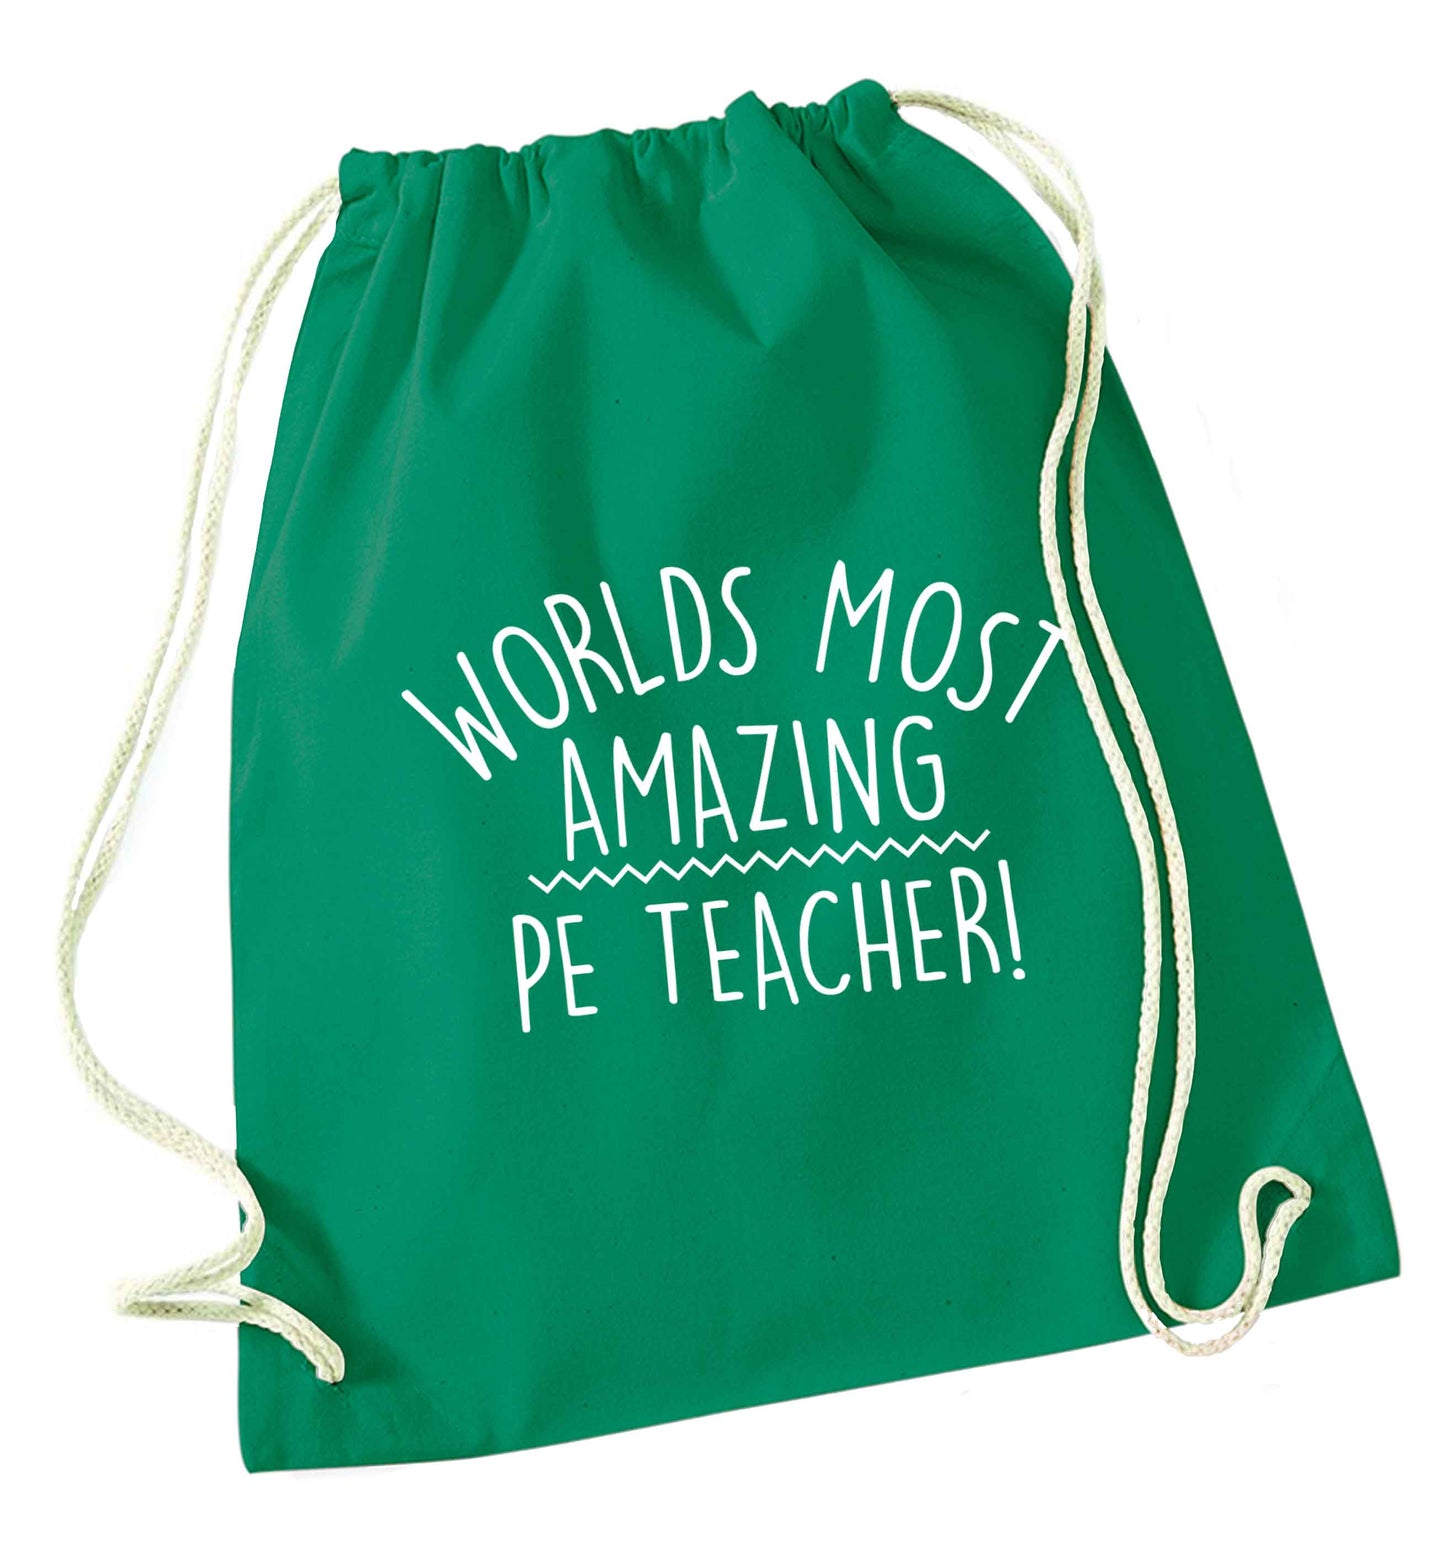 Worlds most amazing PE teacher green drawstring bag